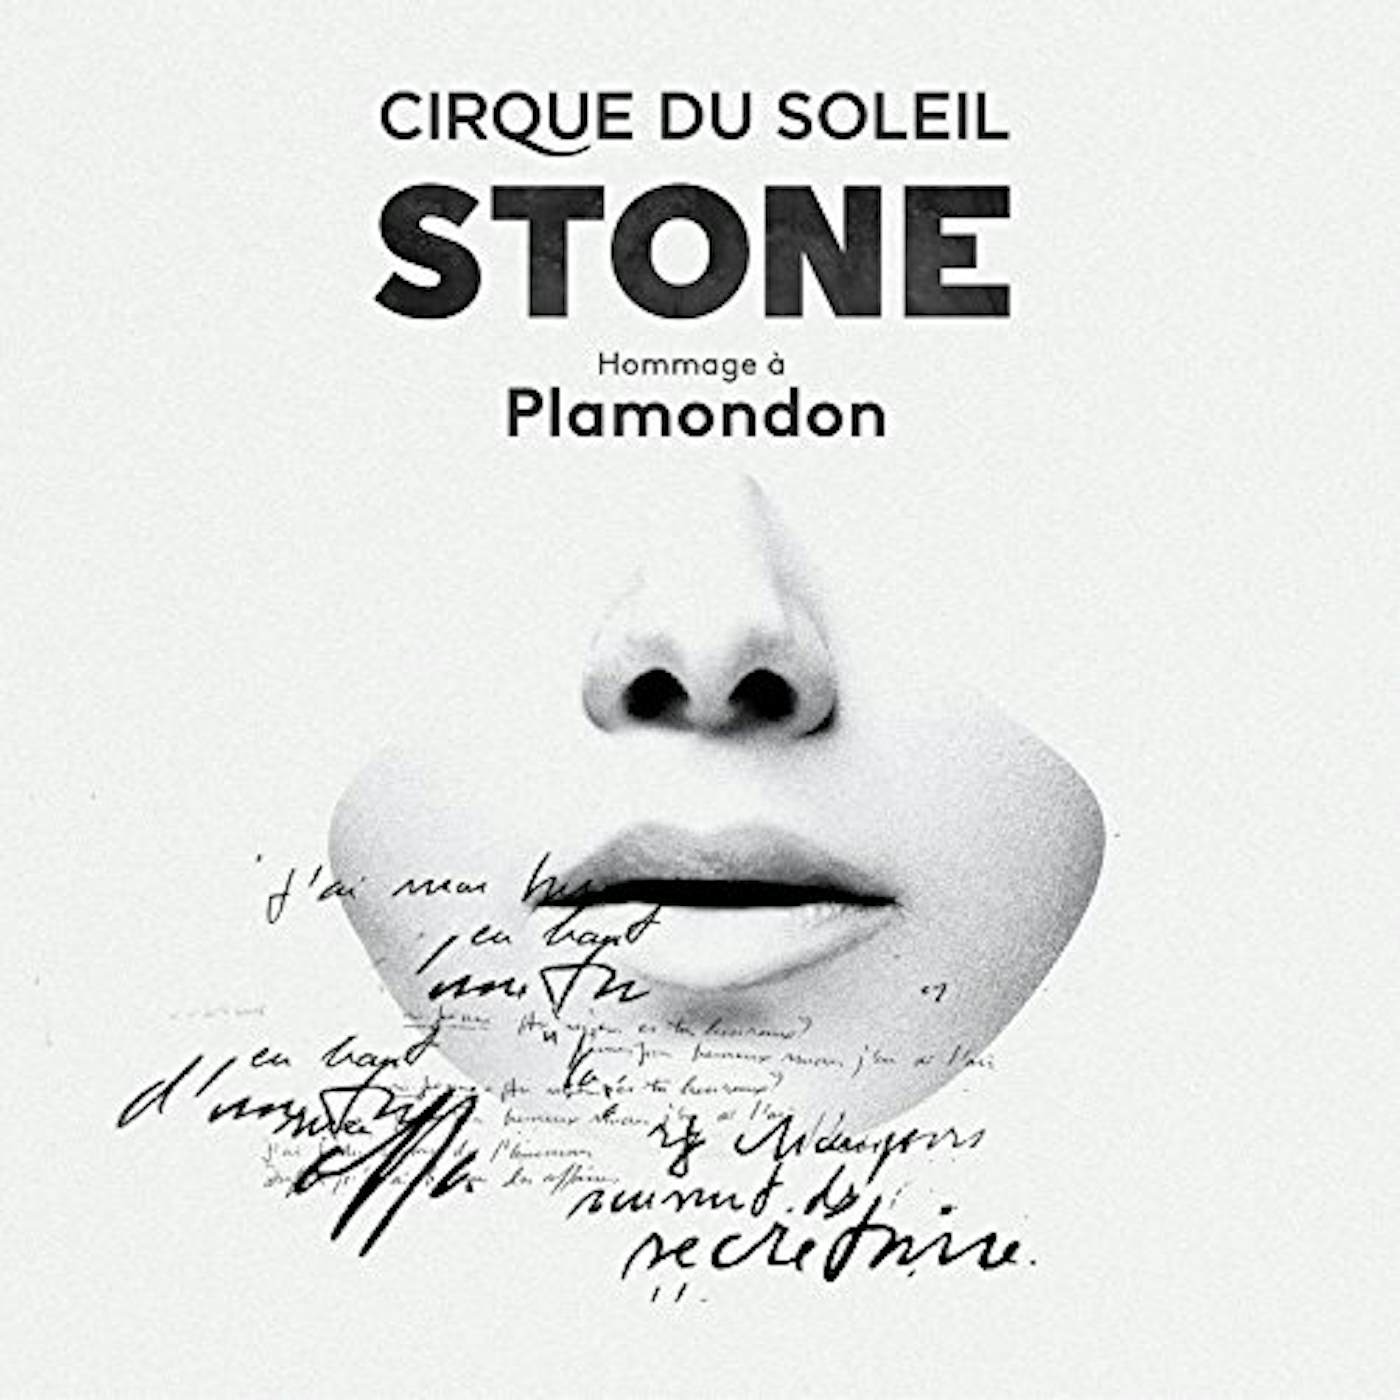 Cirque du Soleil STONE: HOMMAGE A PLAMONDON CD